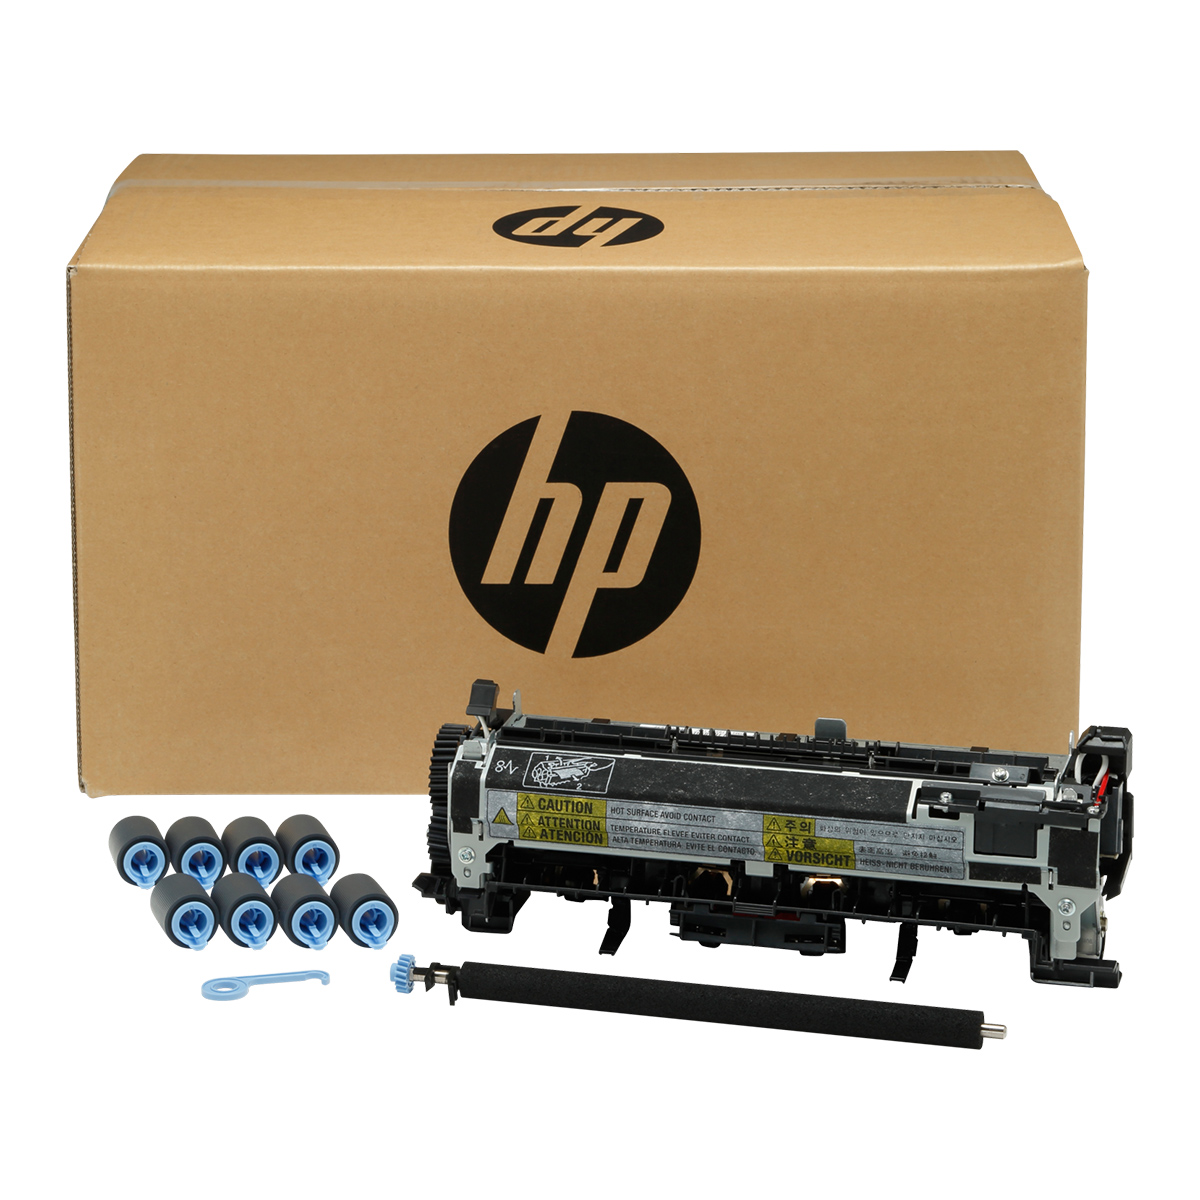 HP LaserJet 220V Fuser Maintenance Kit B3M78A